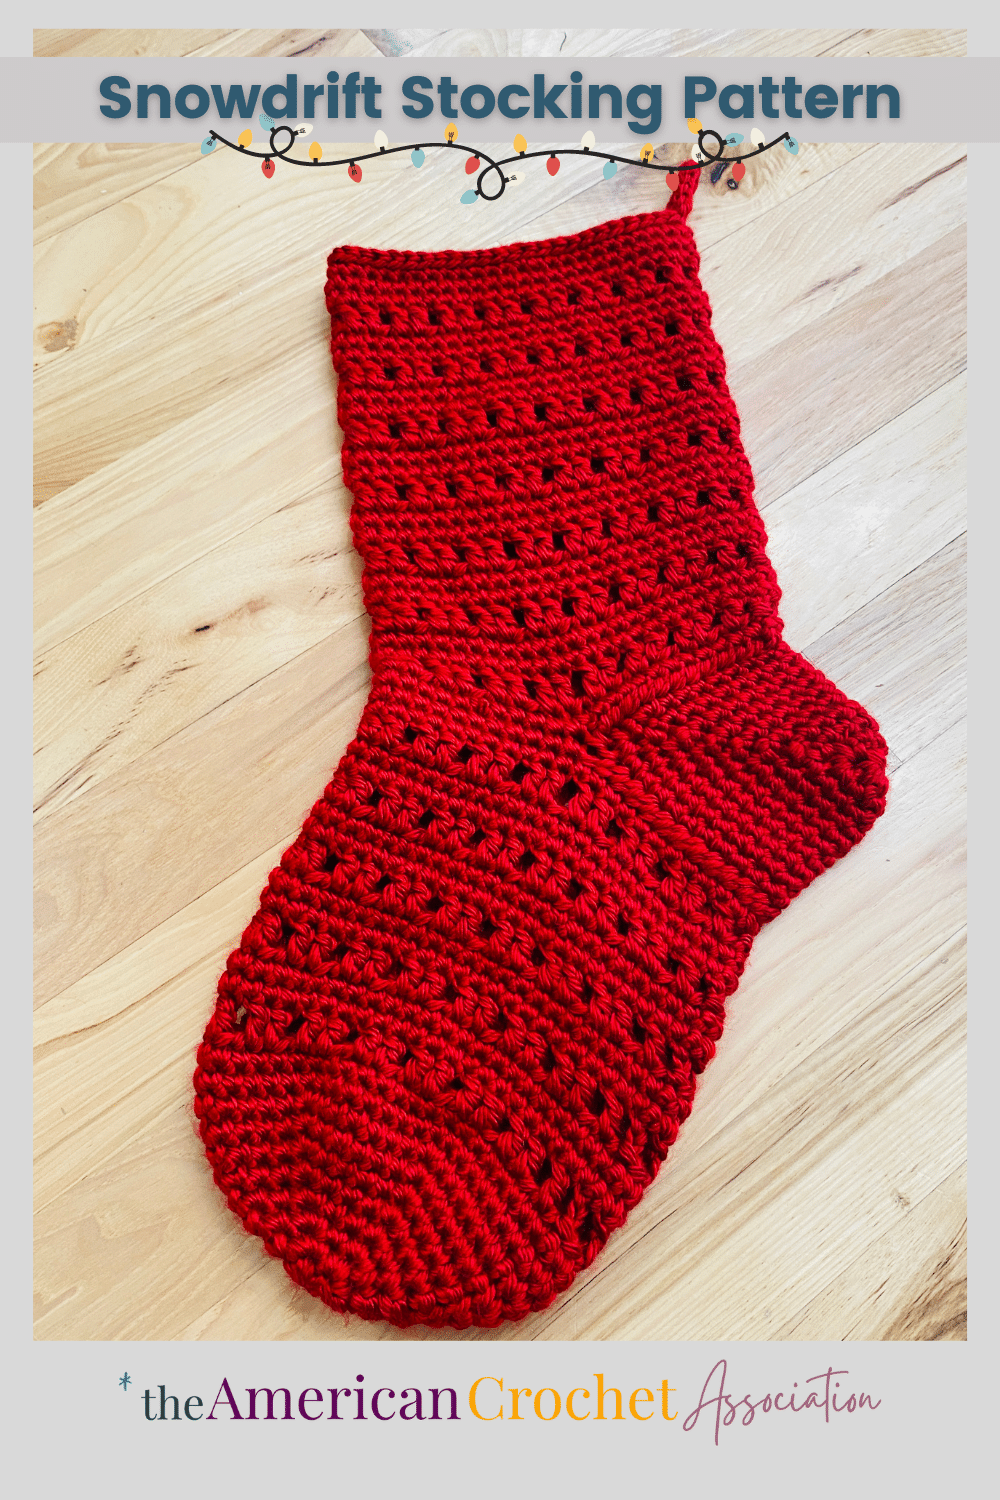 Red crochet stocking on wooden floor